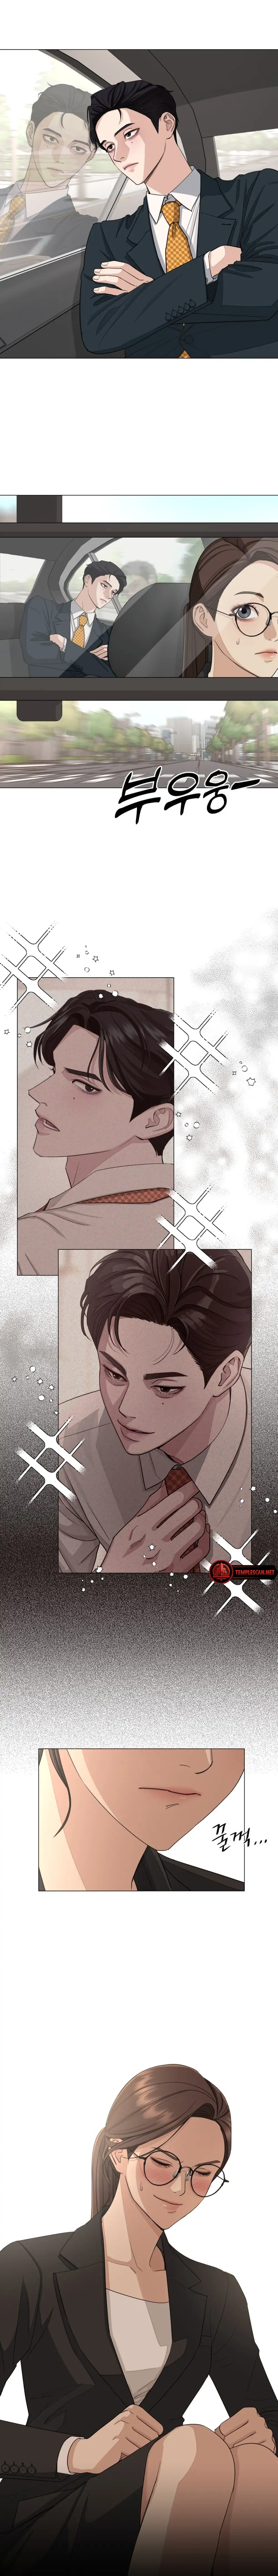 Lee Seob’s love chapter 2